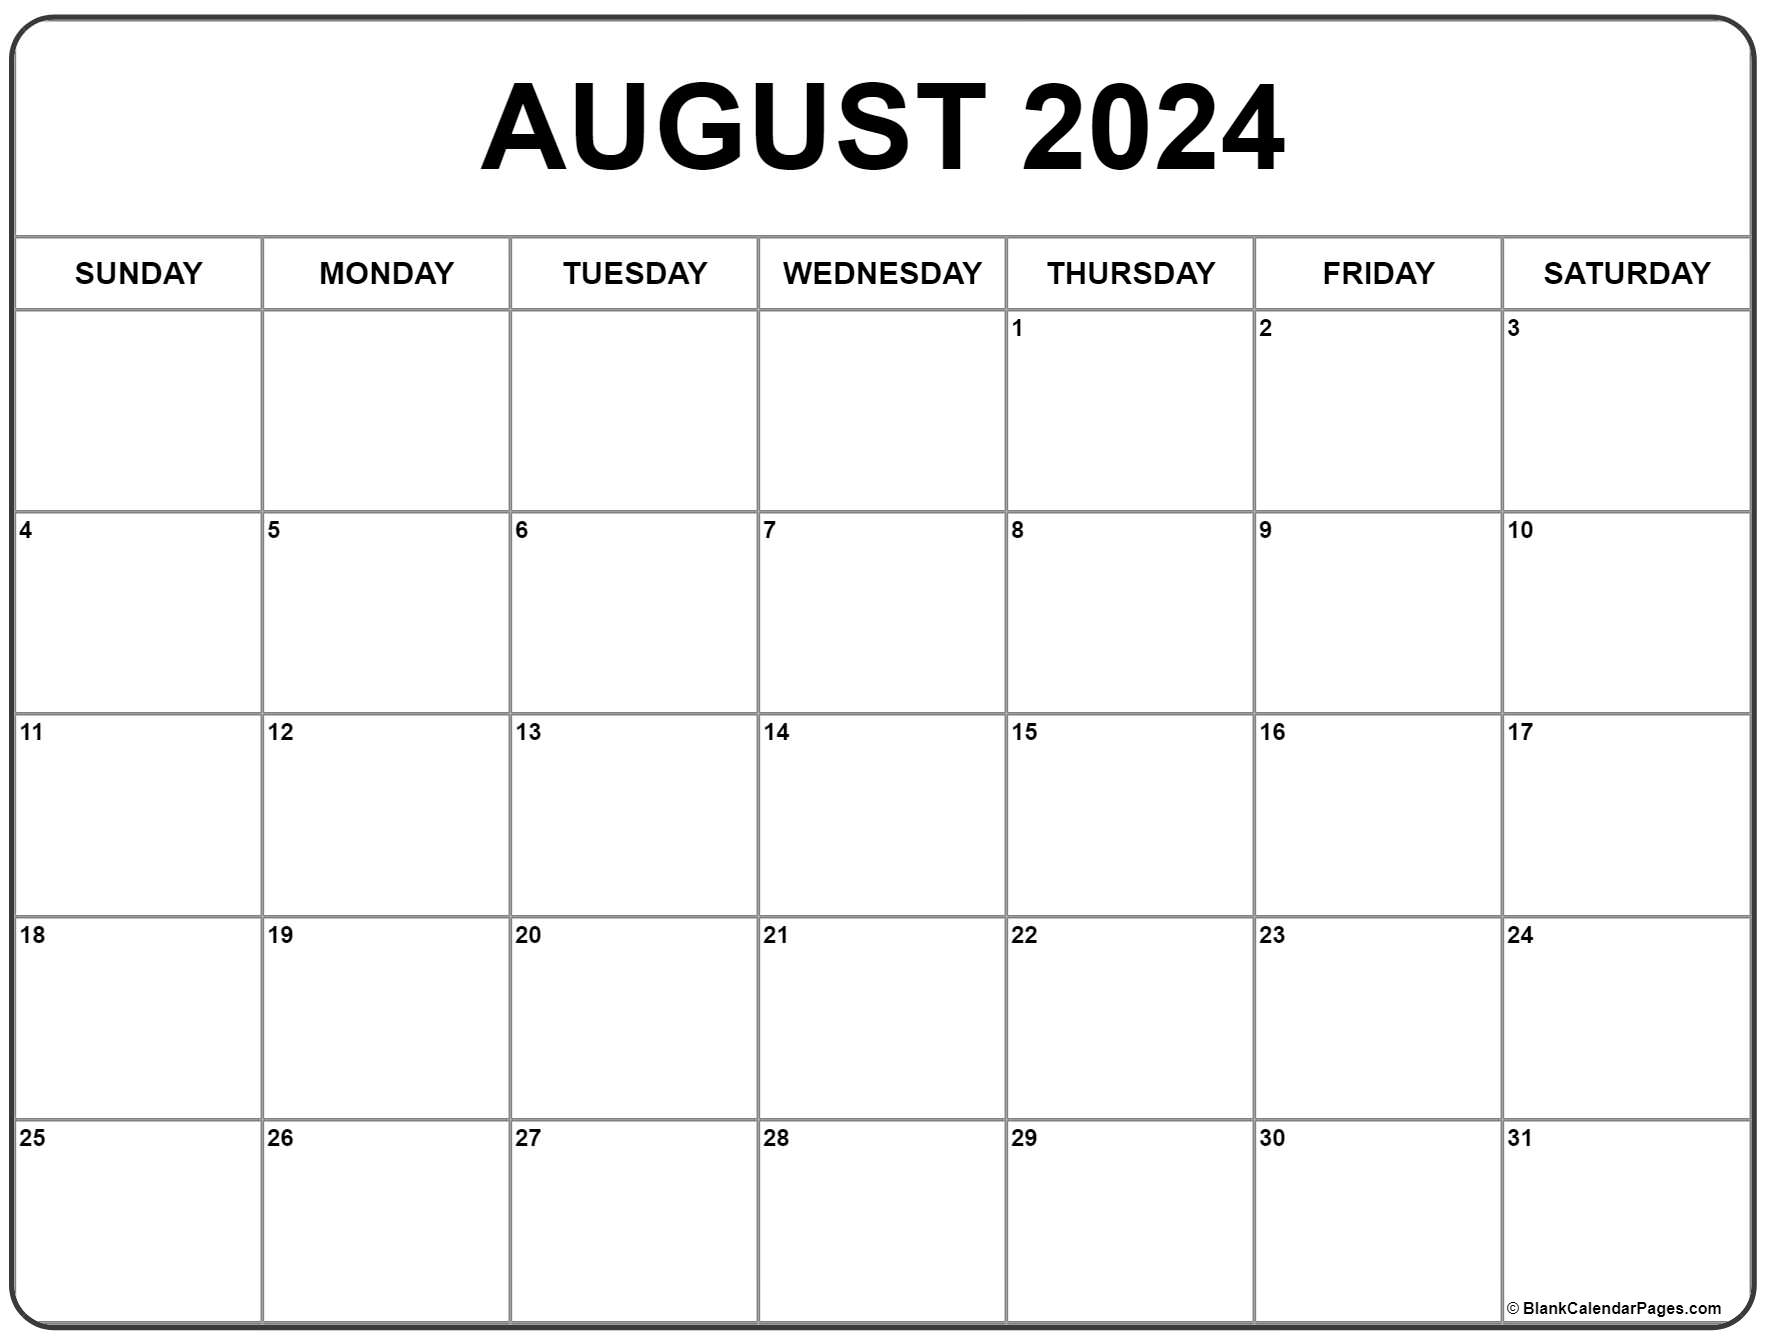 Calendar August 2024 Image Gayel Joelynn